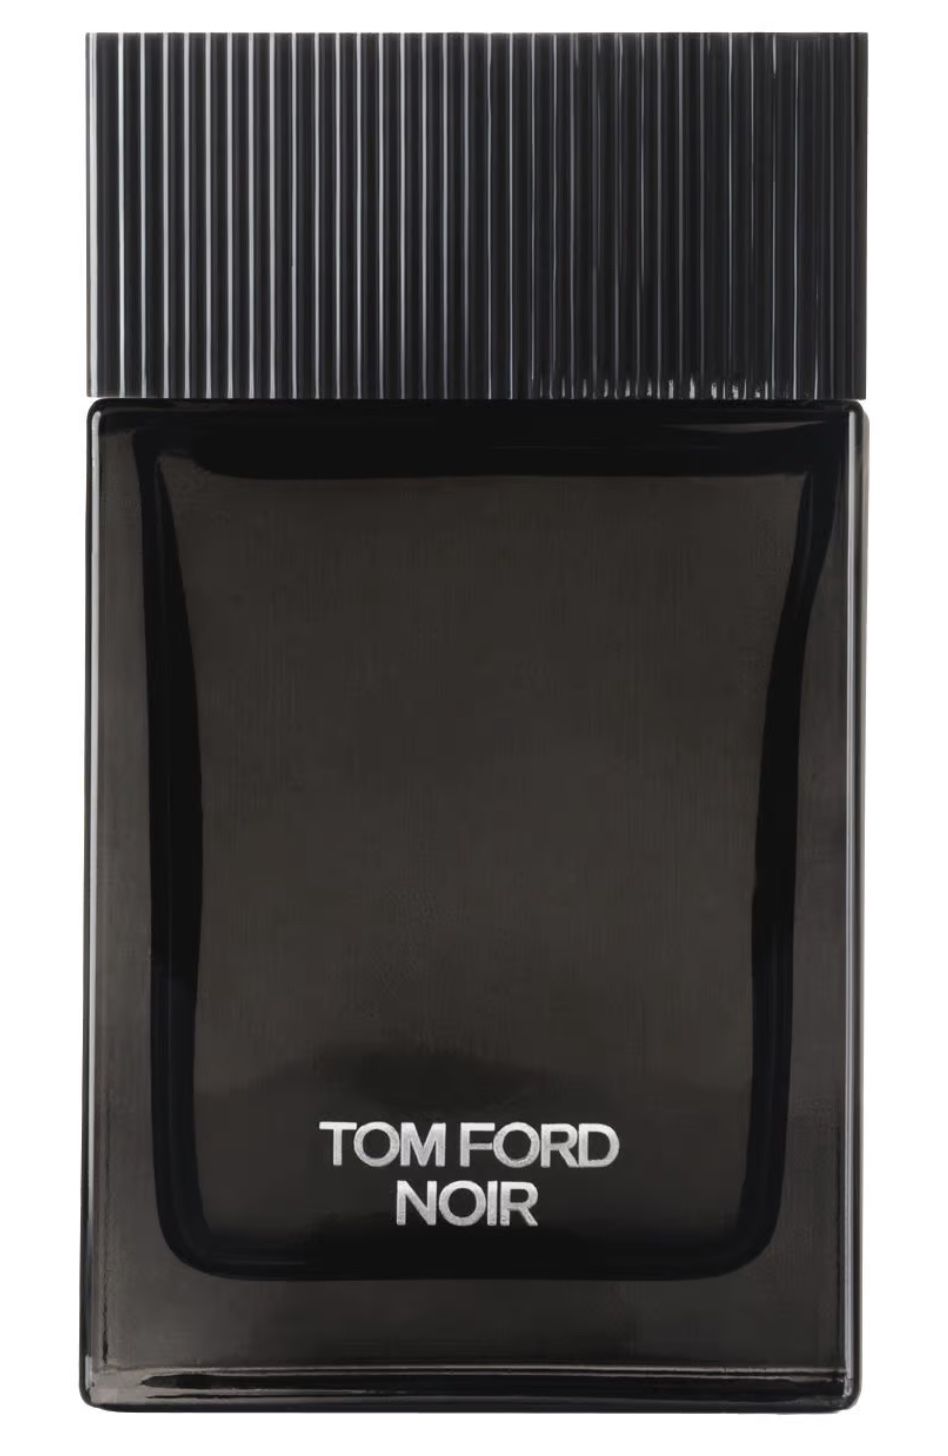 100ml Tom Ford Noir Eau de Parfum für 95,15€ (statt 115€)